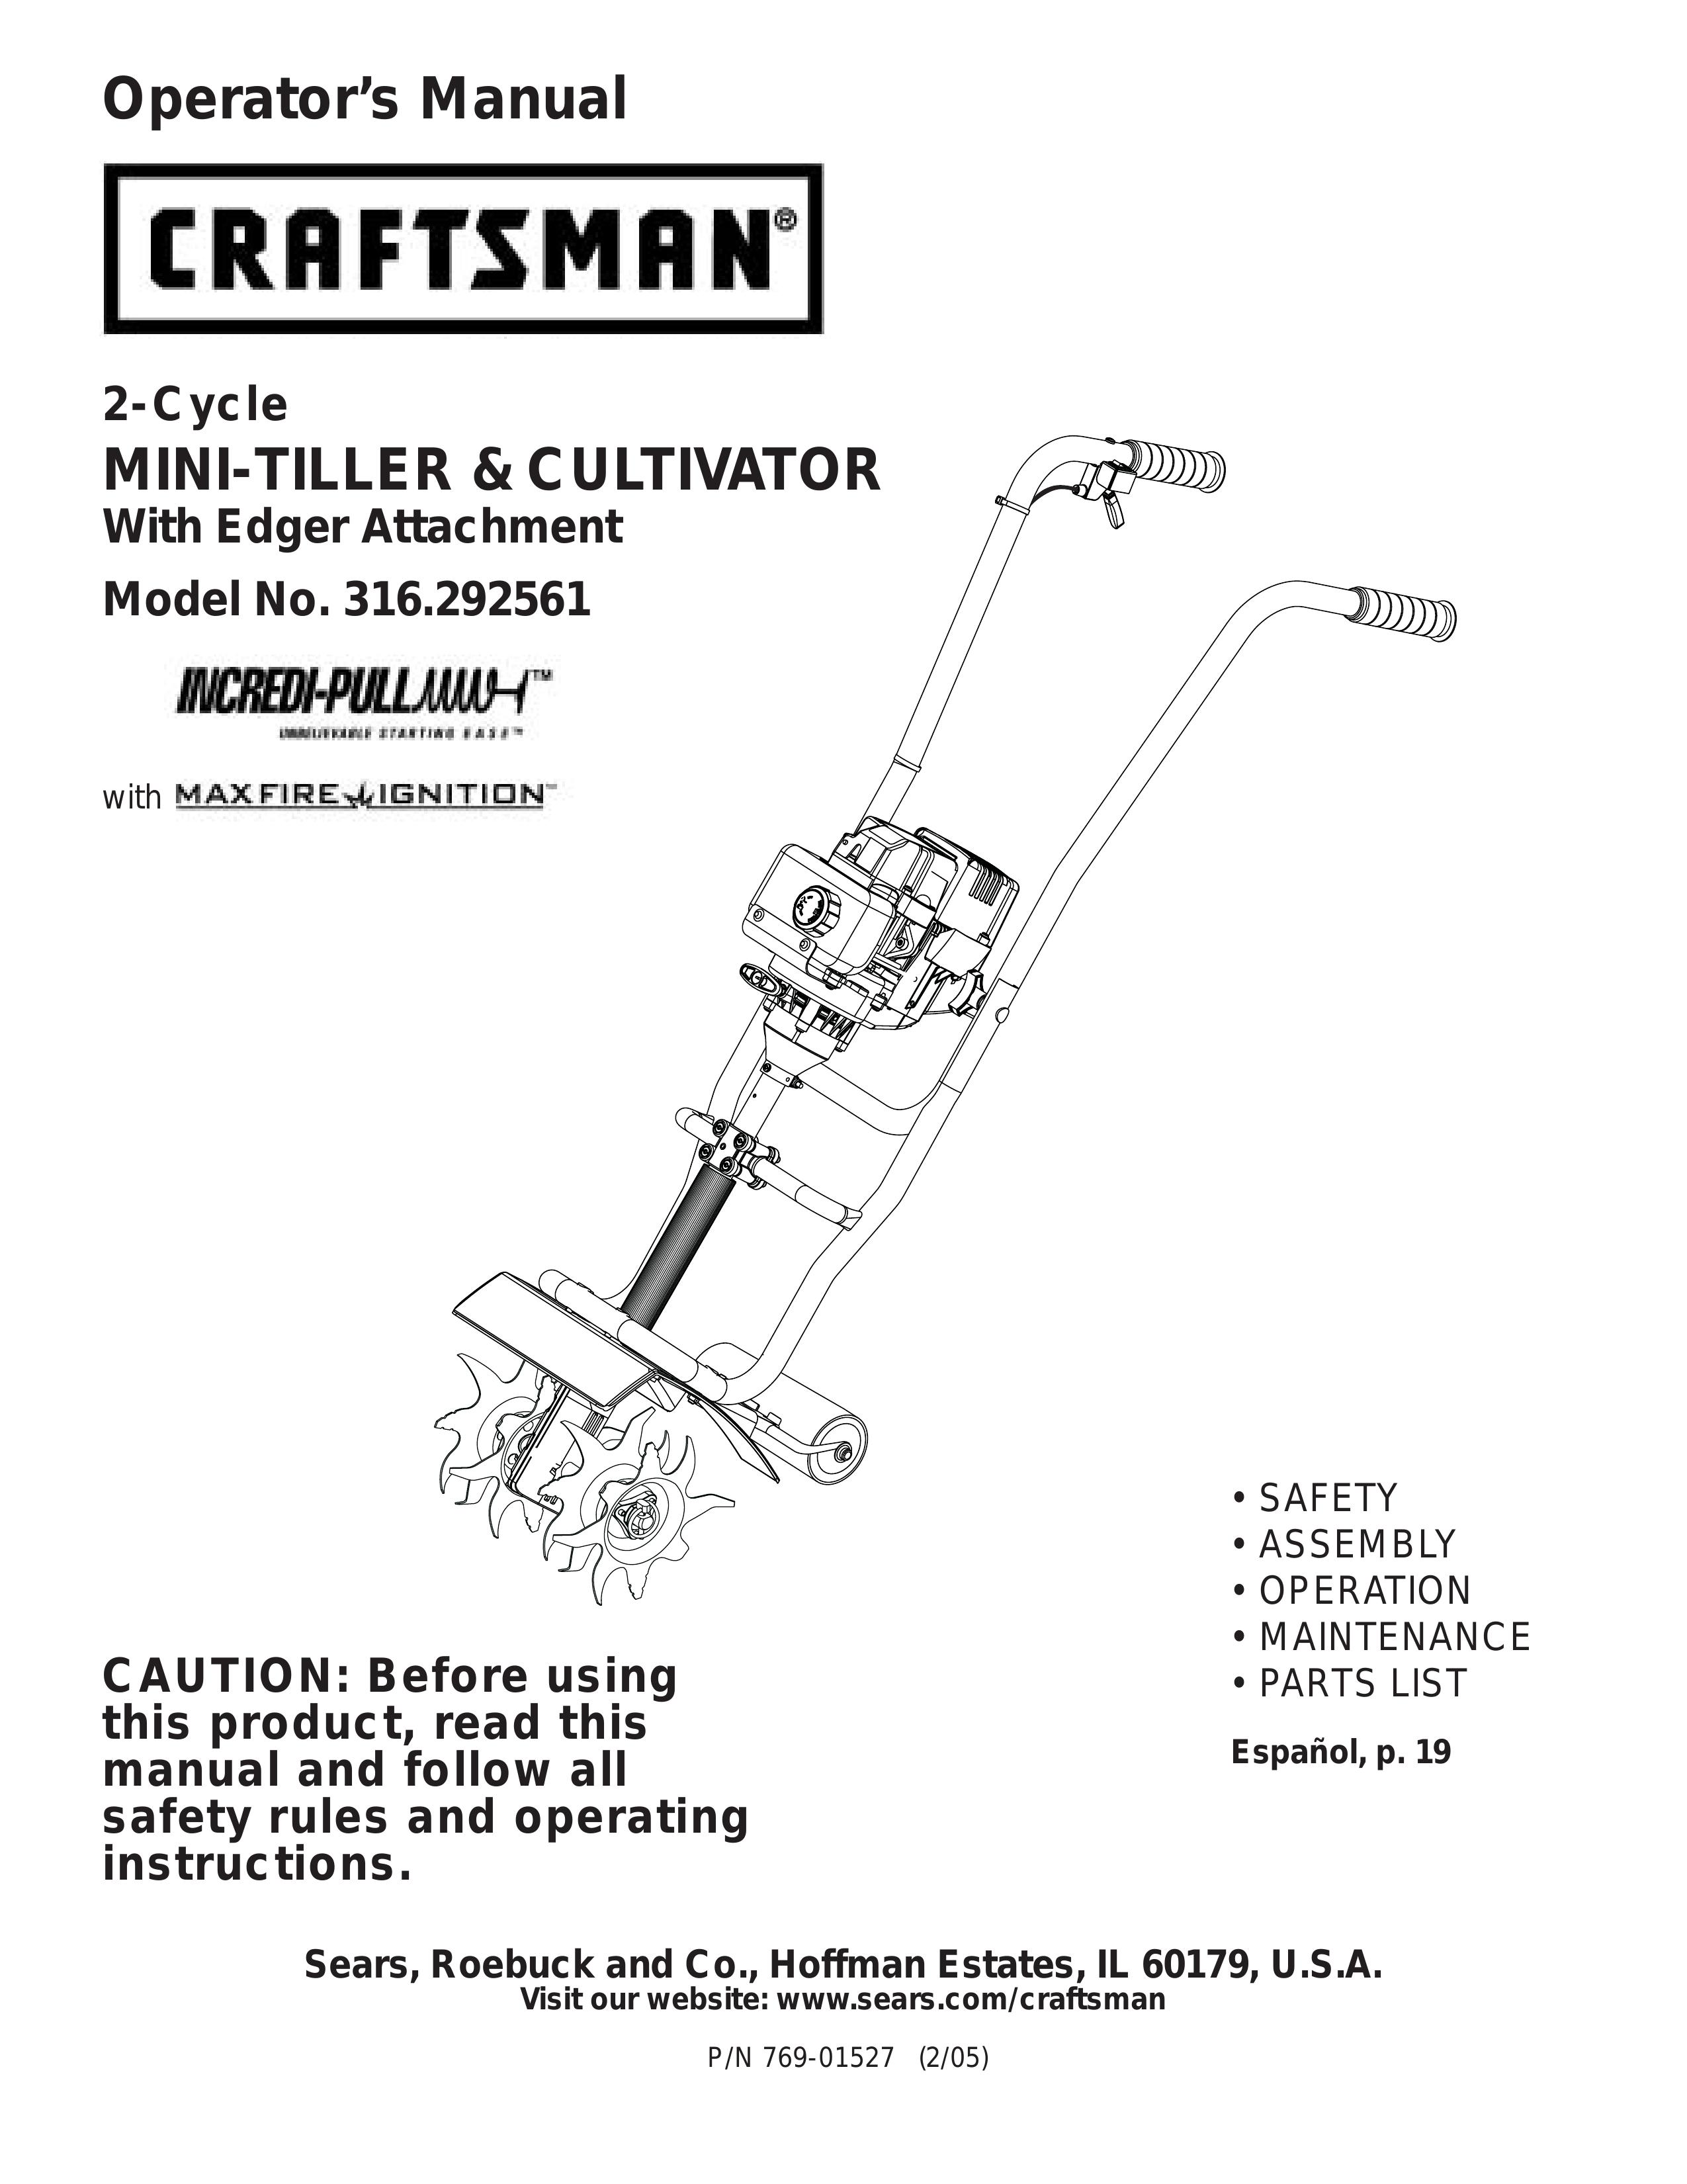 Craftsman 316.292561 Cultivator User Manual